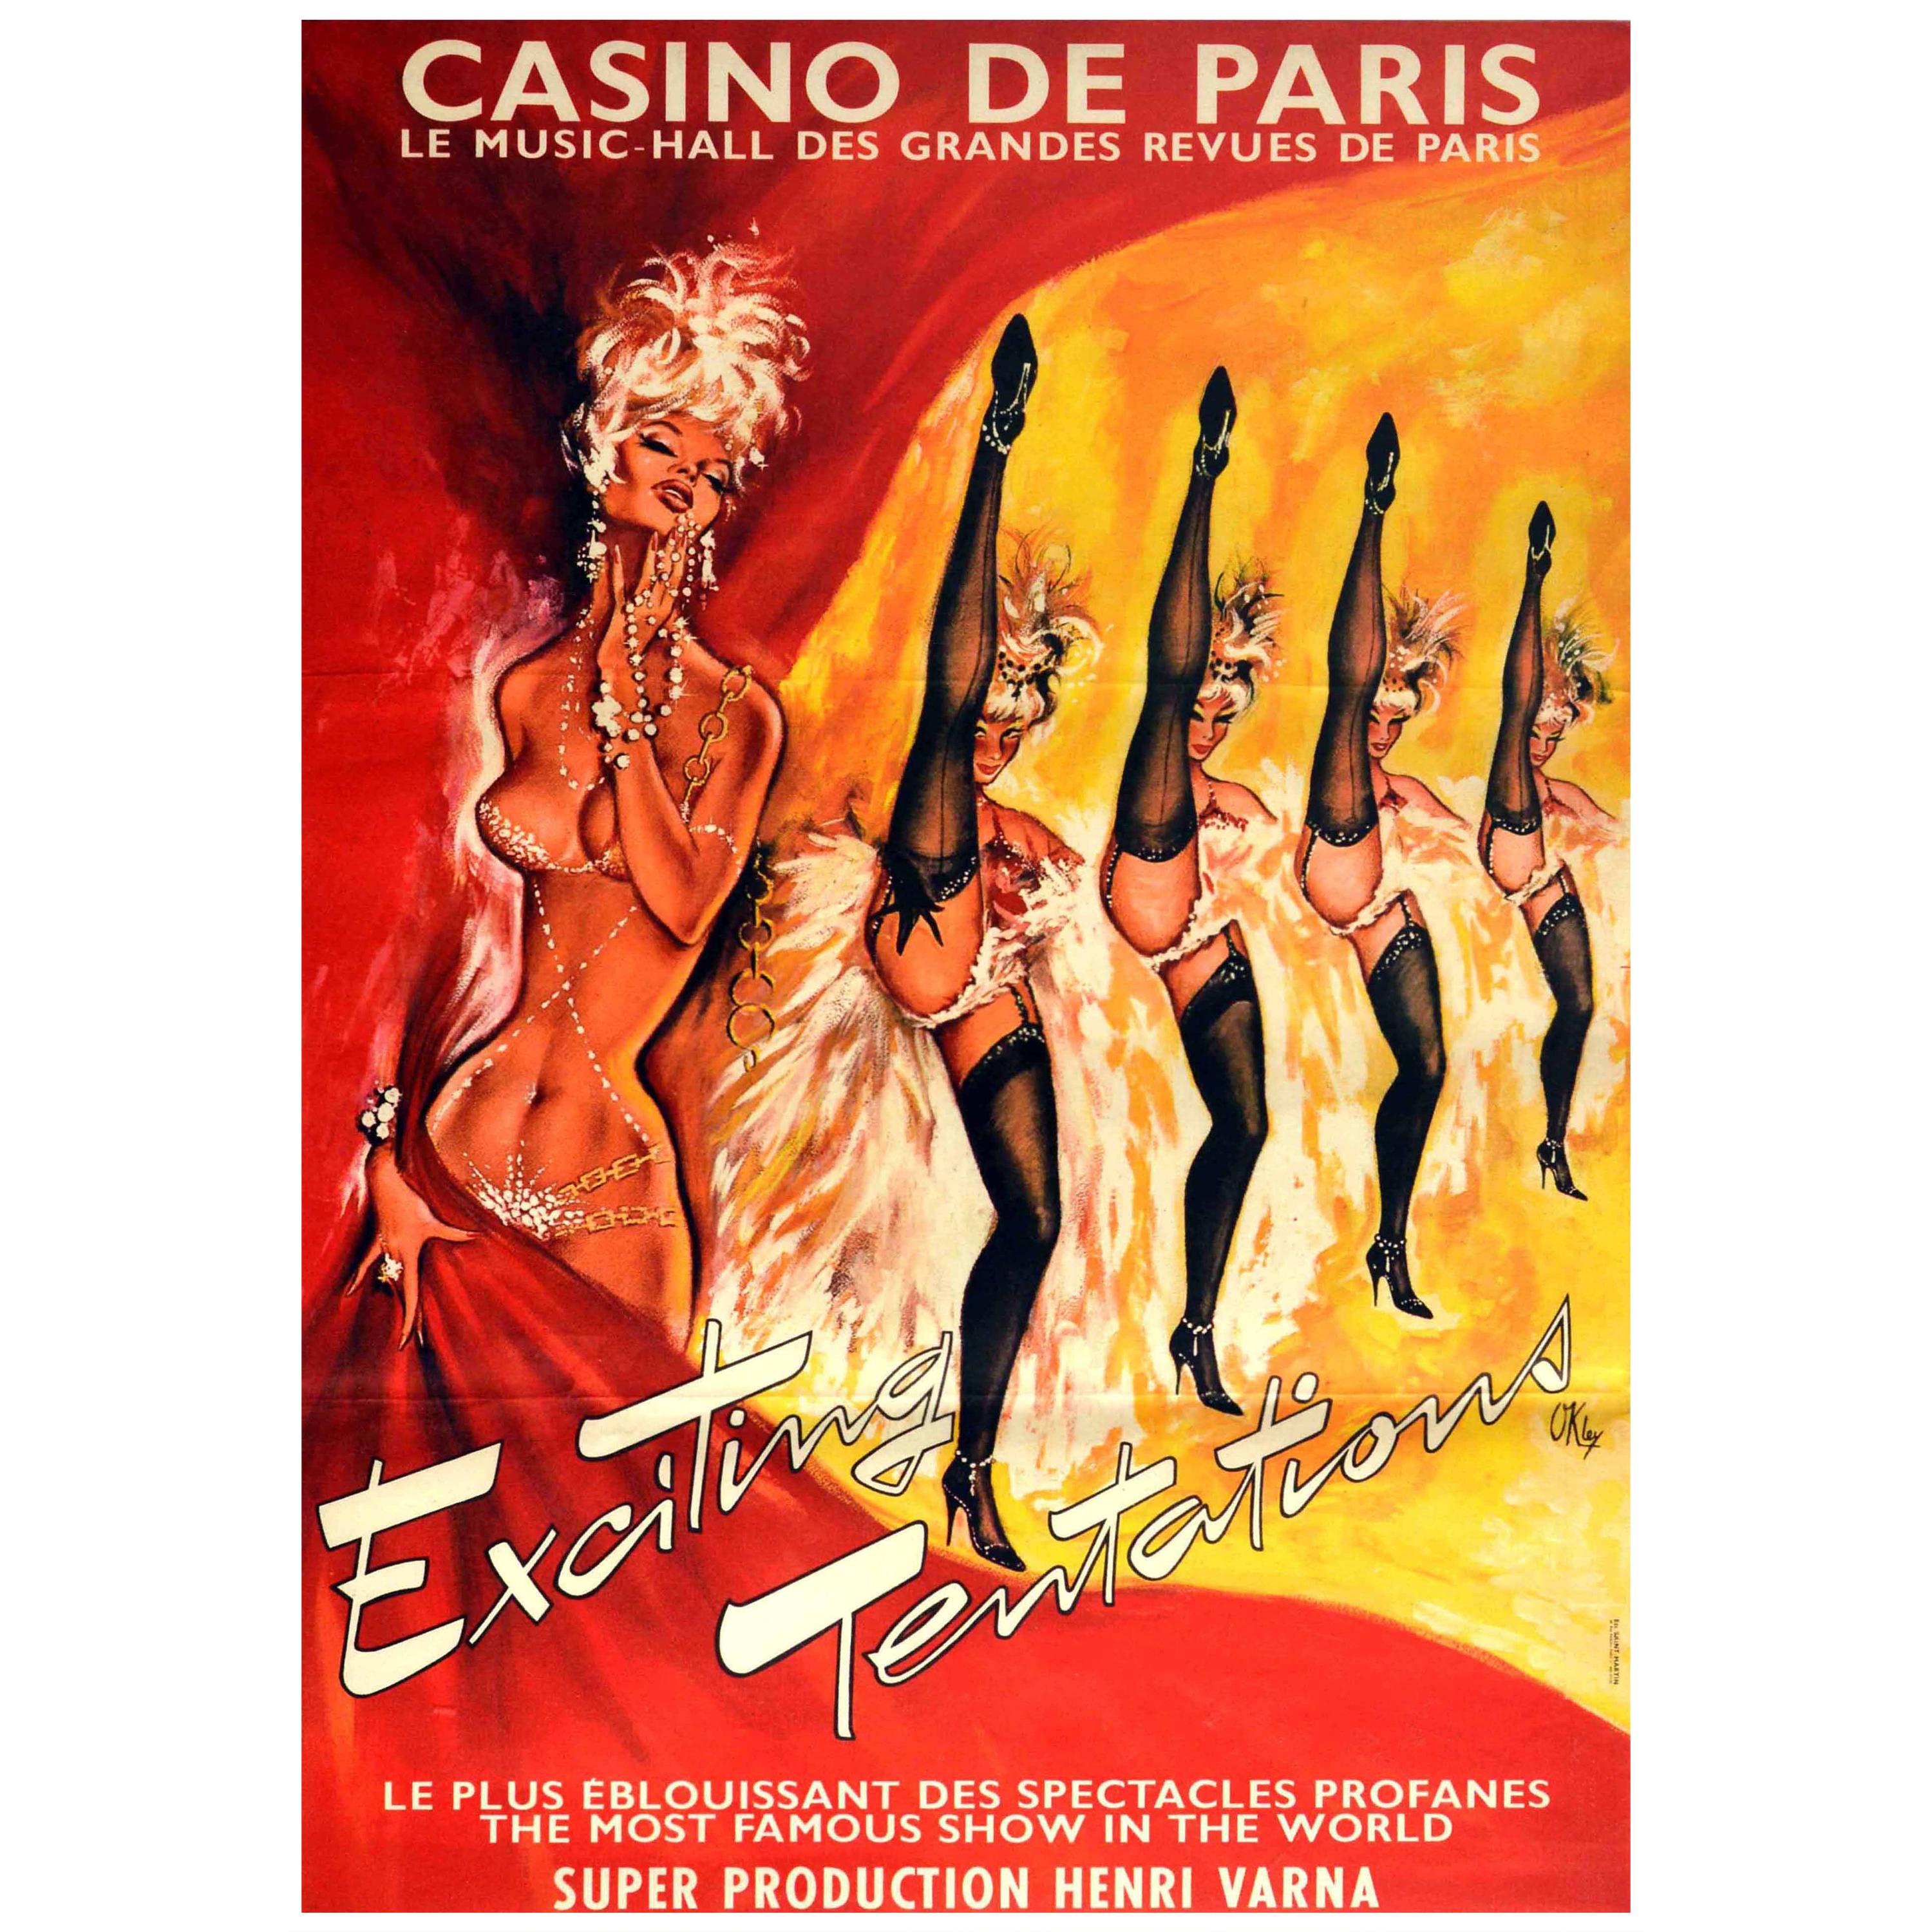 Original Vintage Poster Casino De Paris Exciting Tentations Cabaret Show Can-Can